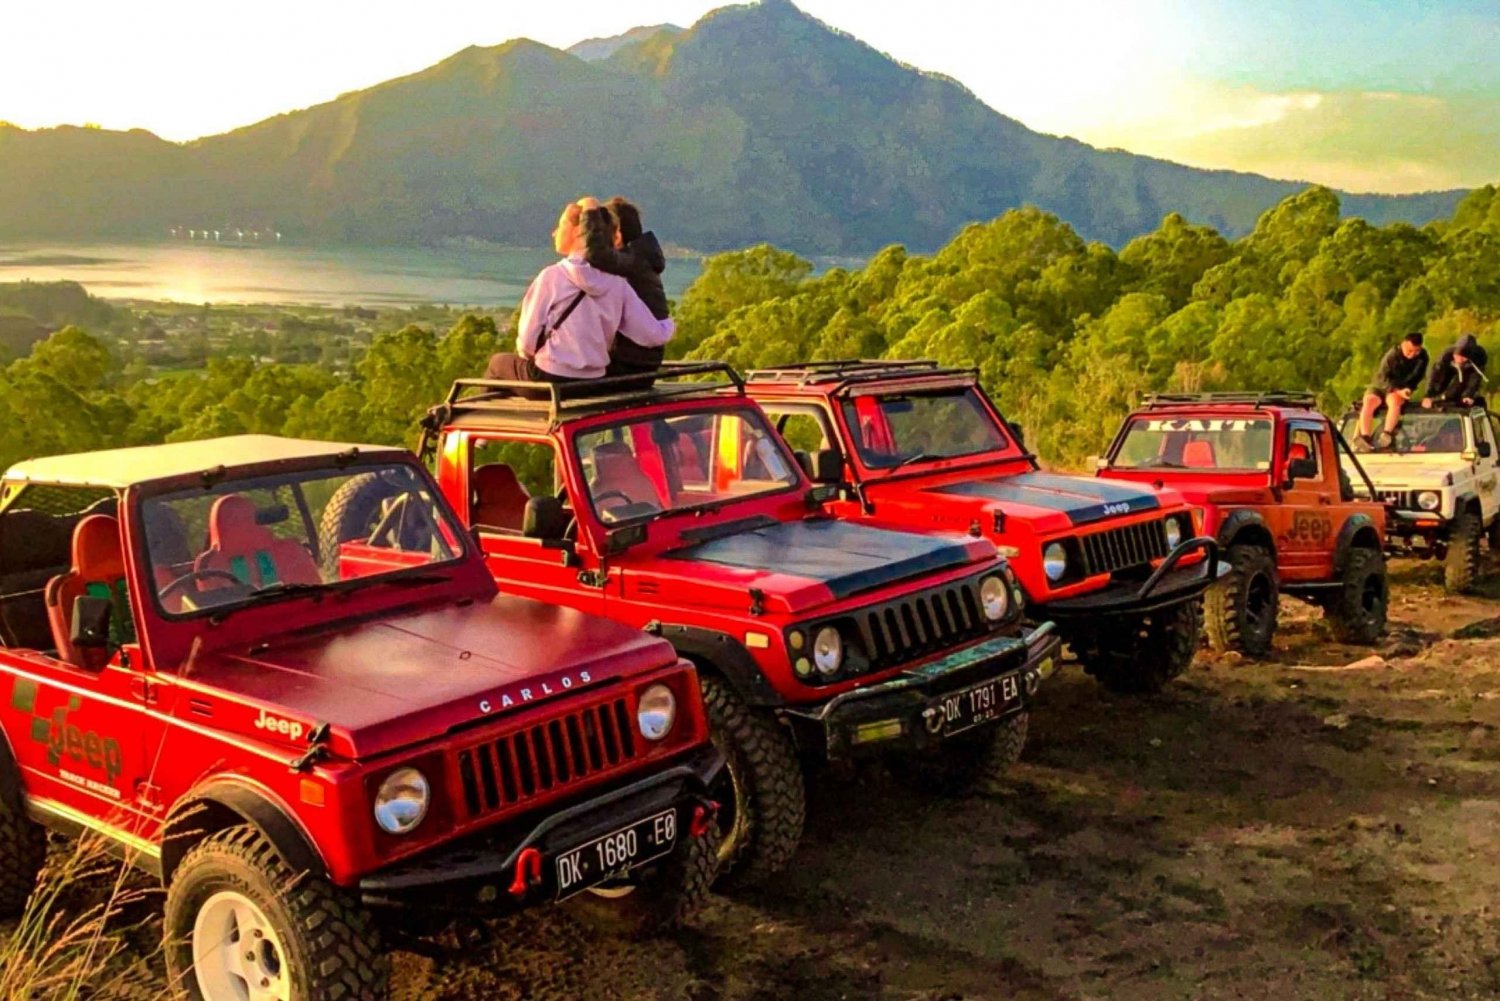 Mount Batur Jeep Sunrise & Hot Spring - All Inclusive